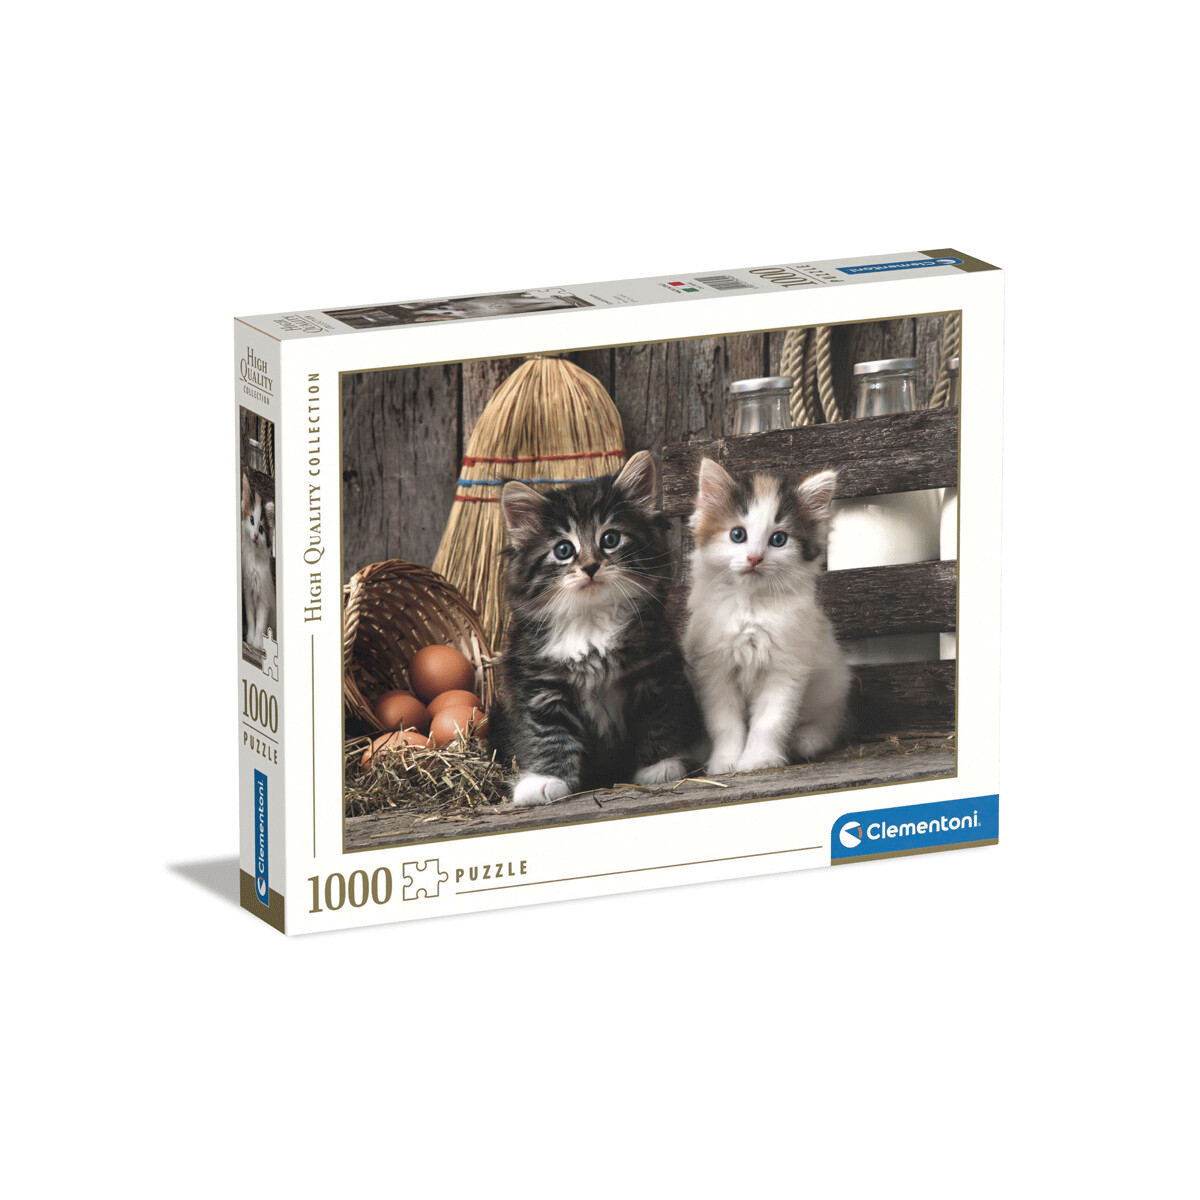 Clementoni - 39340 - puzzle 1000 hqc lovely kittens 70 x 50 cm - CLEMENTONI